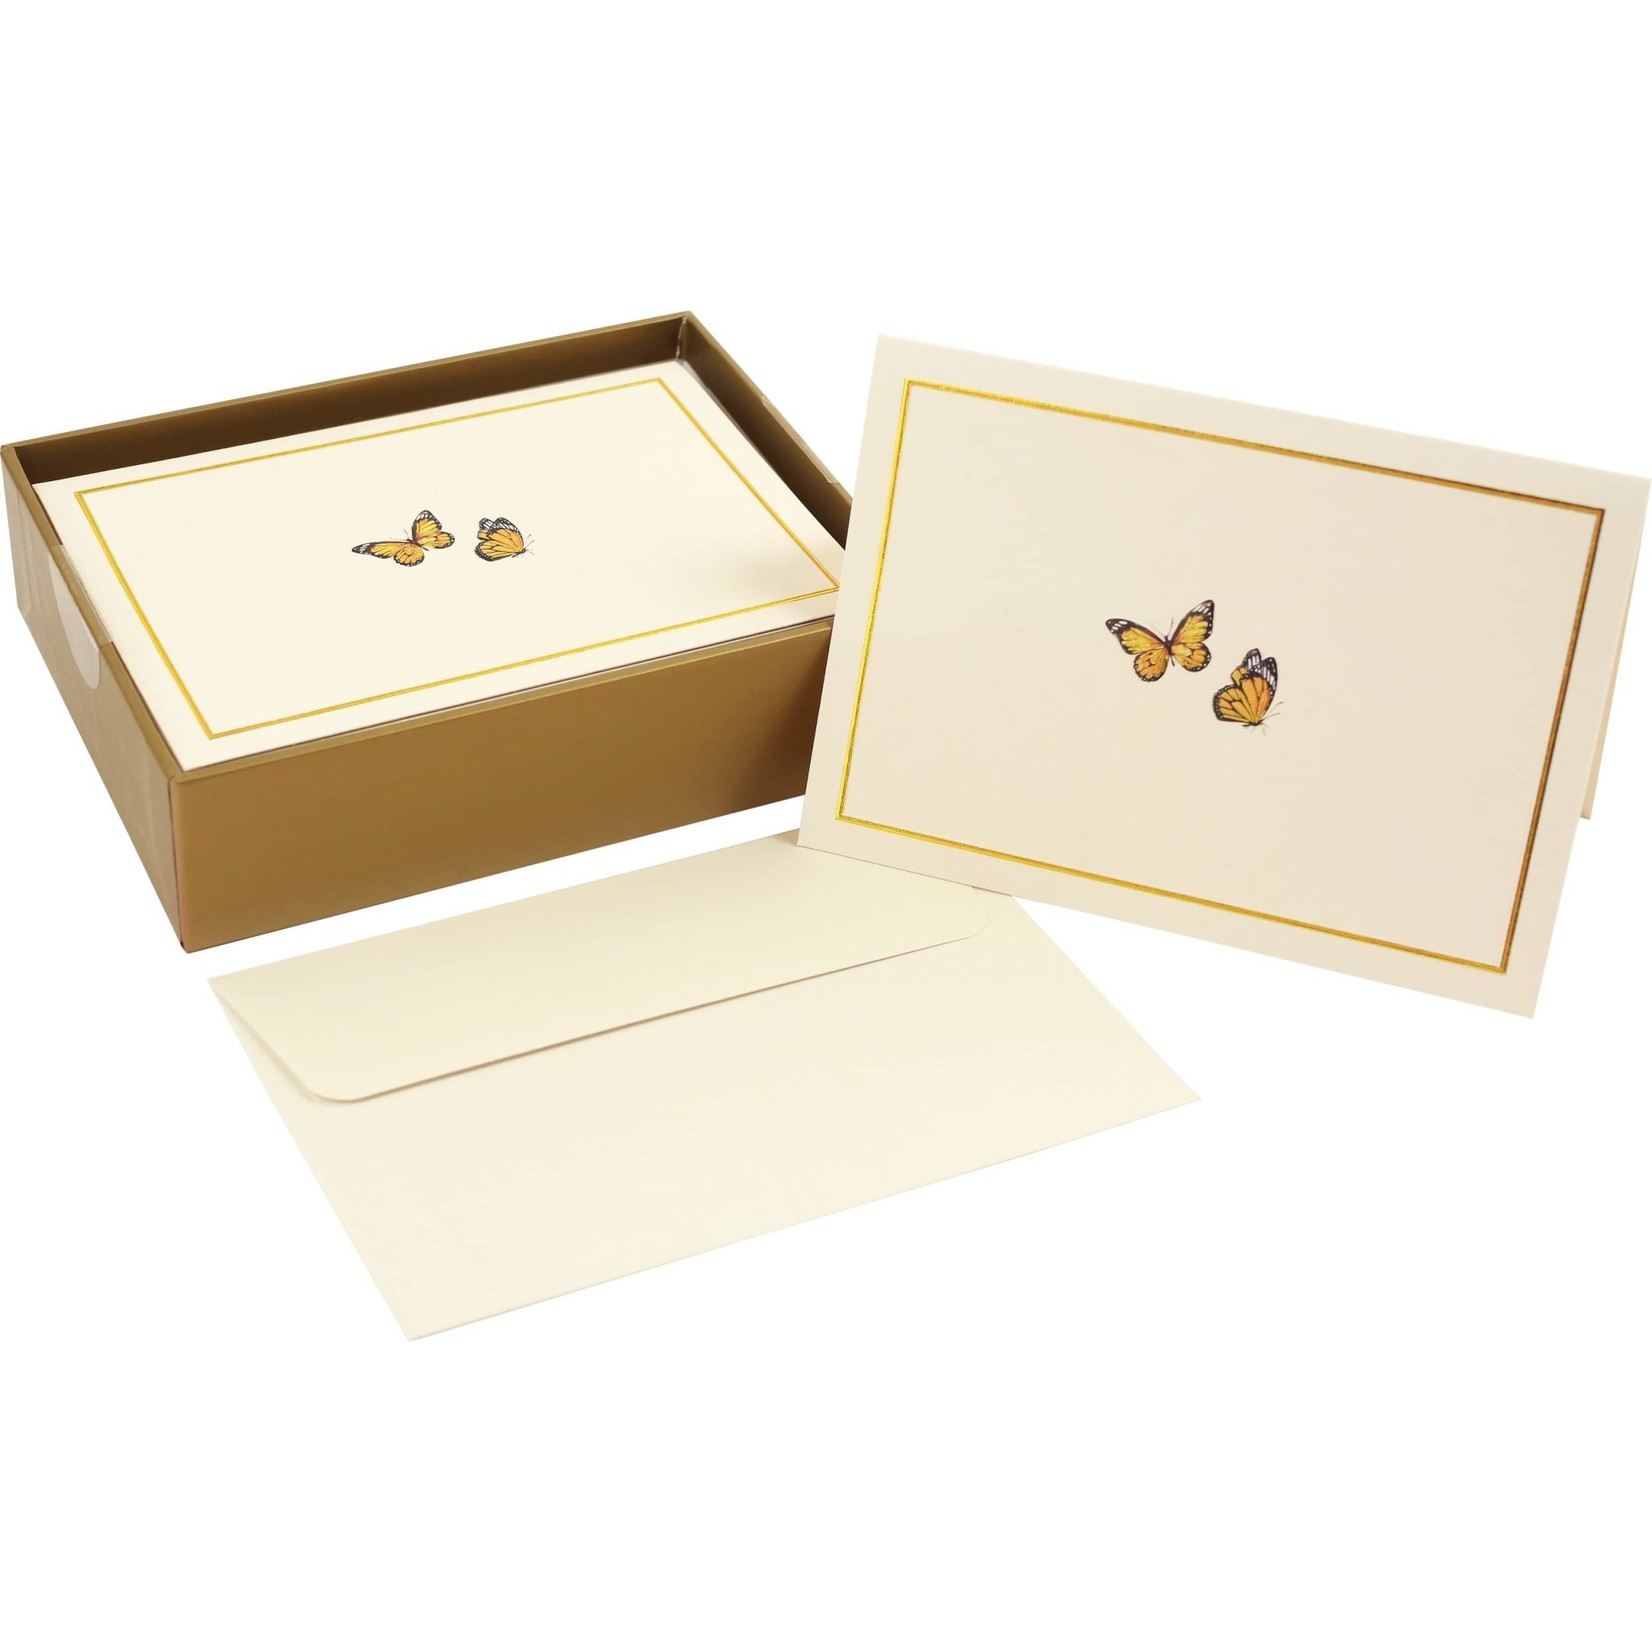 Peter Pauper Press Boxed Note Cards: Monarch Butterflies